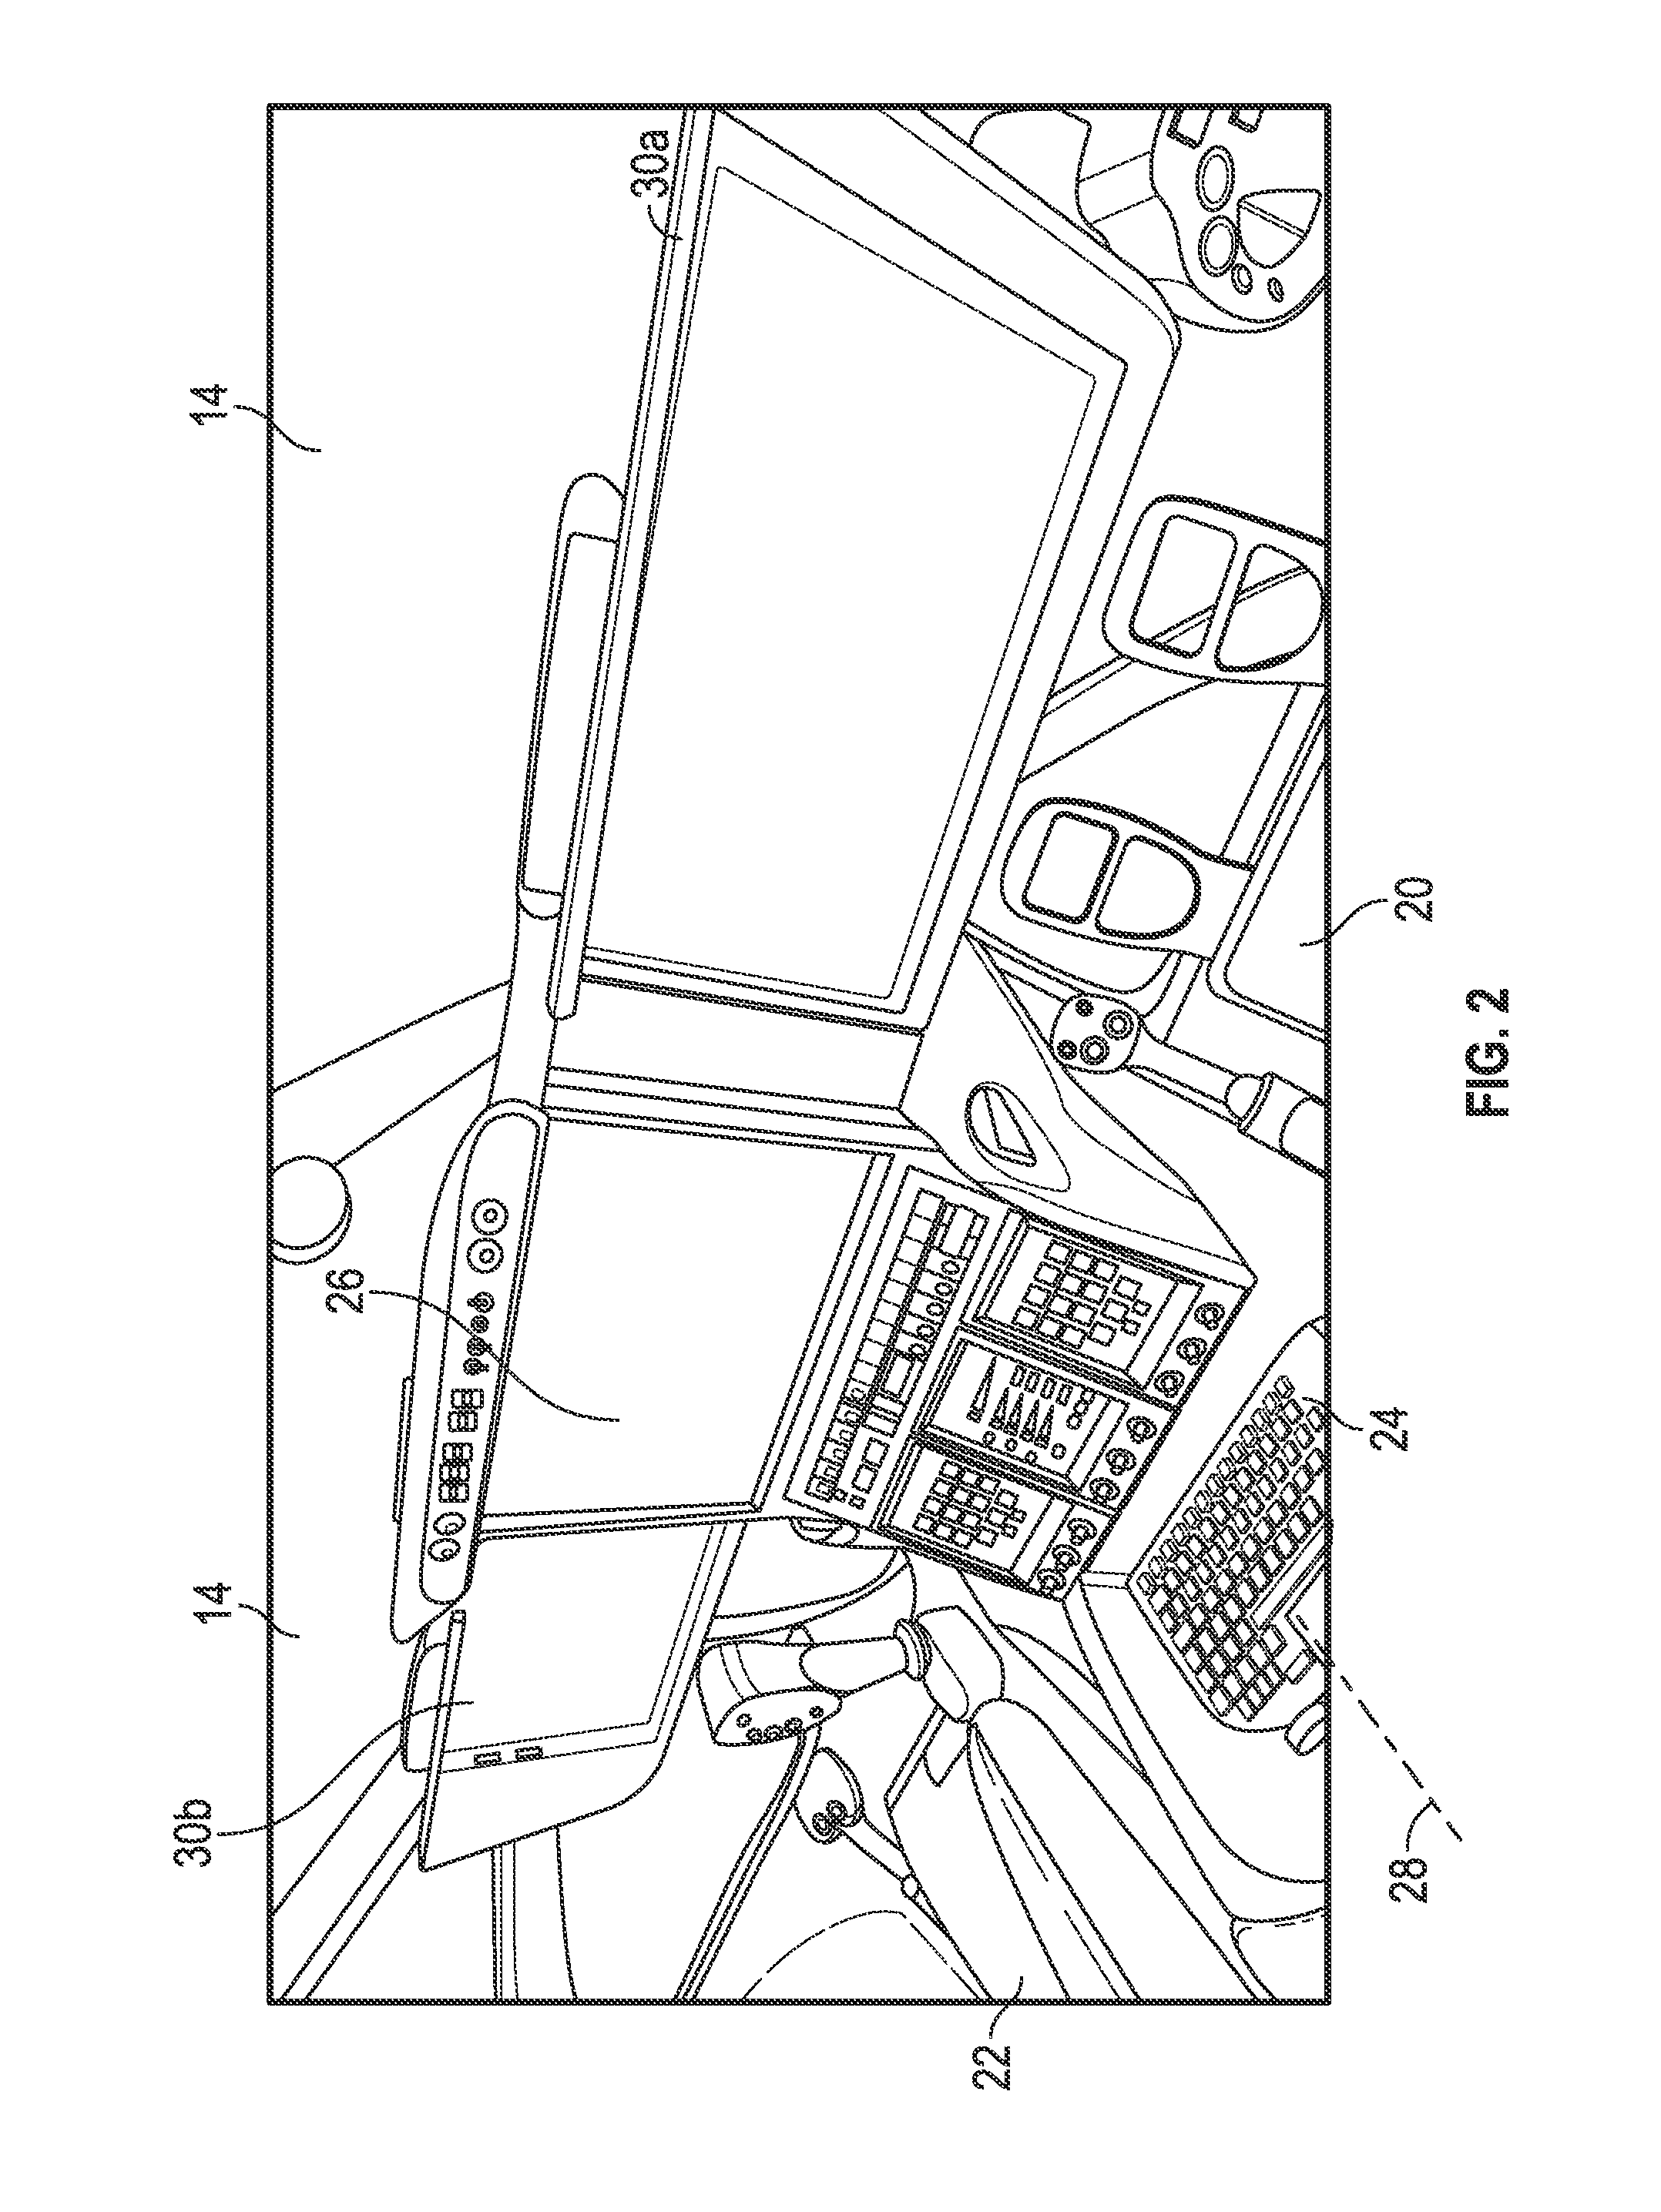 Enhancement of cockpit external visibility